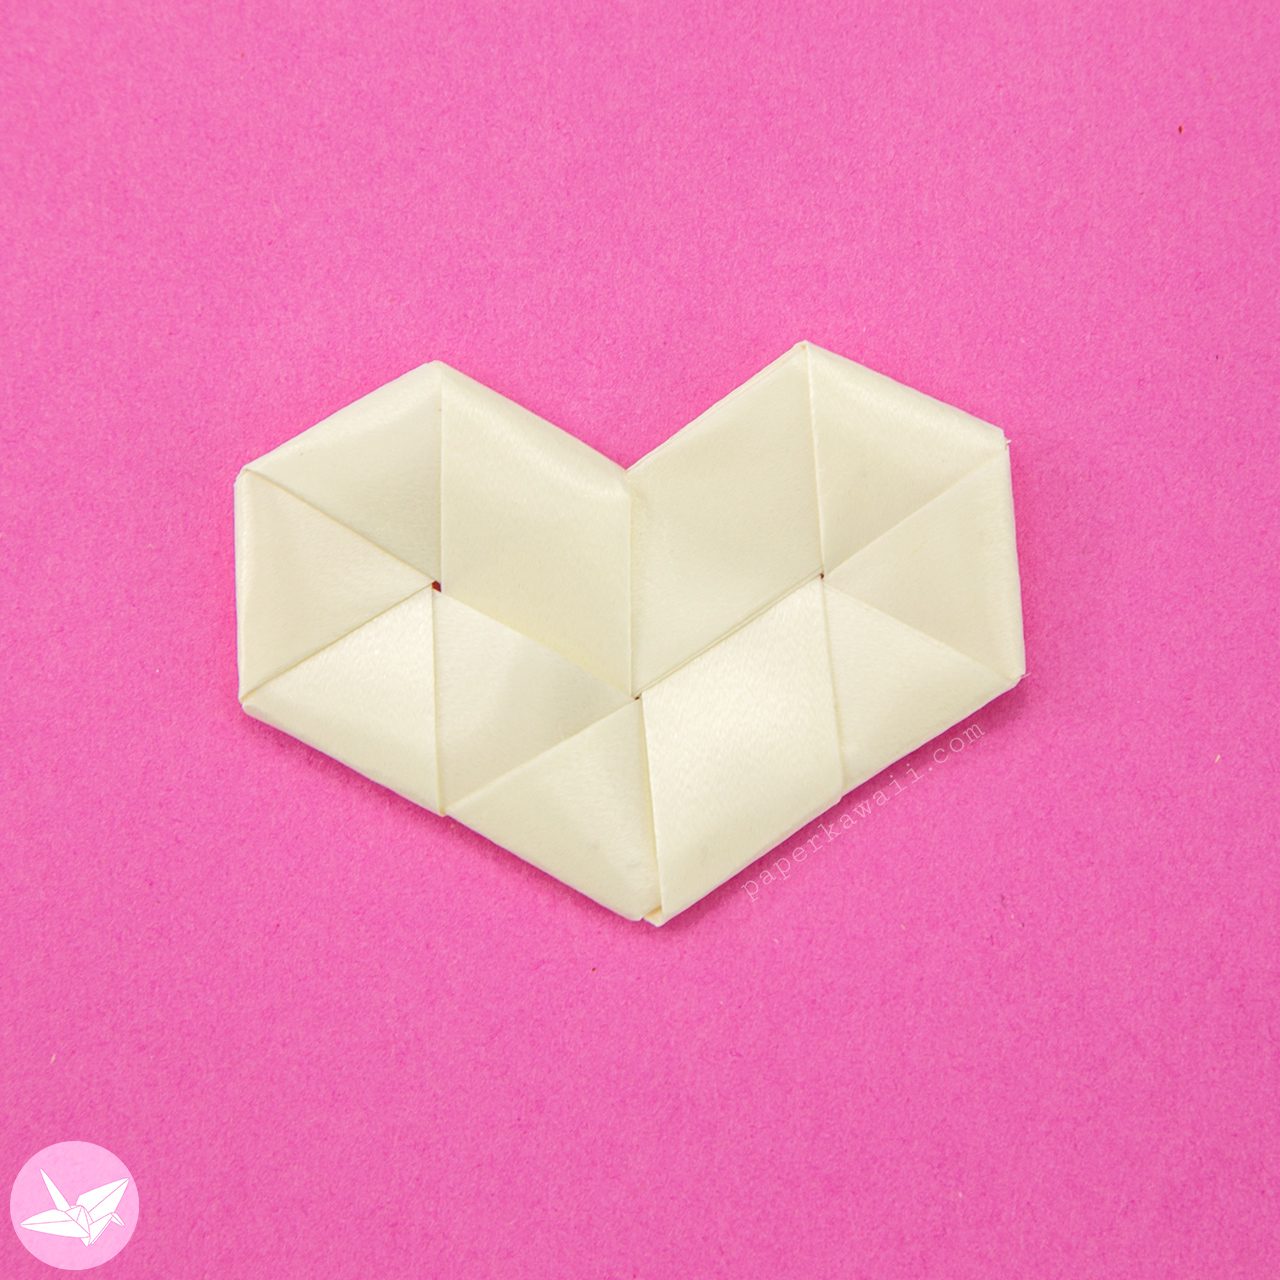 Origami Woven Hearts Tutorial Paper Kawaii 04